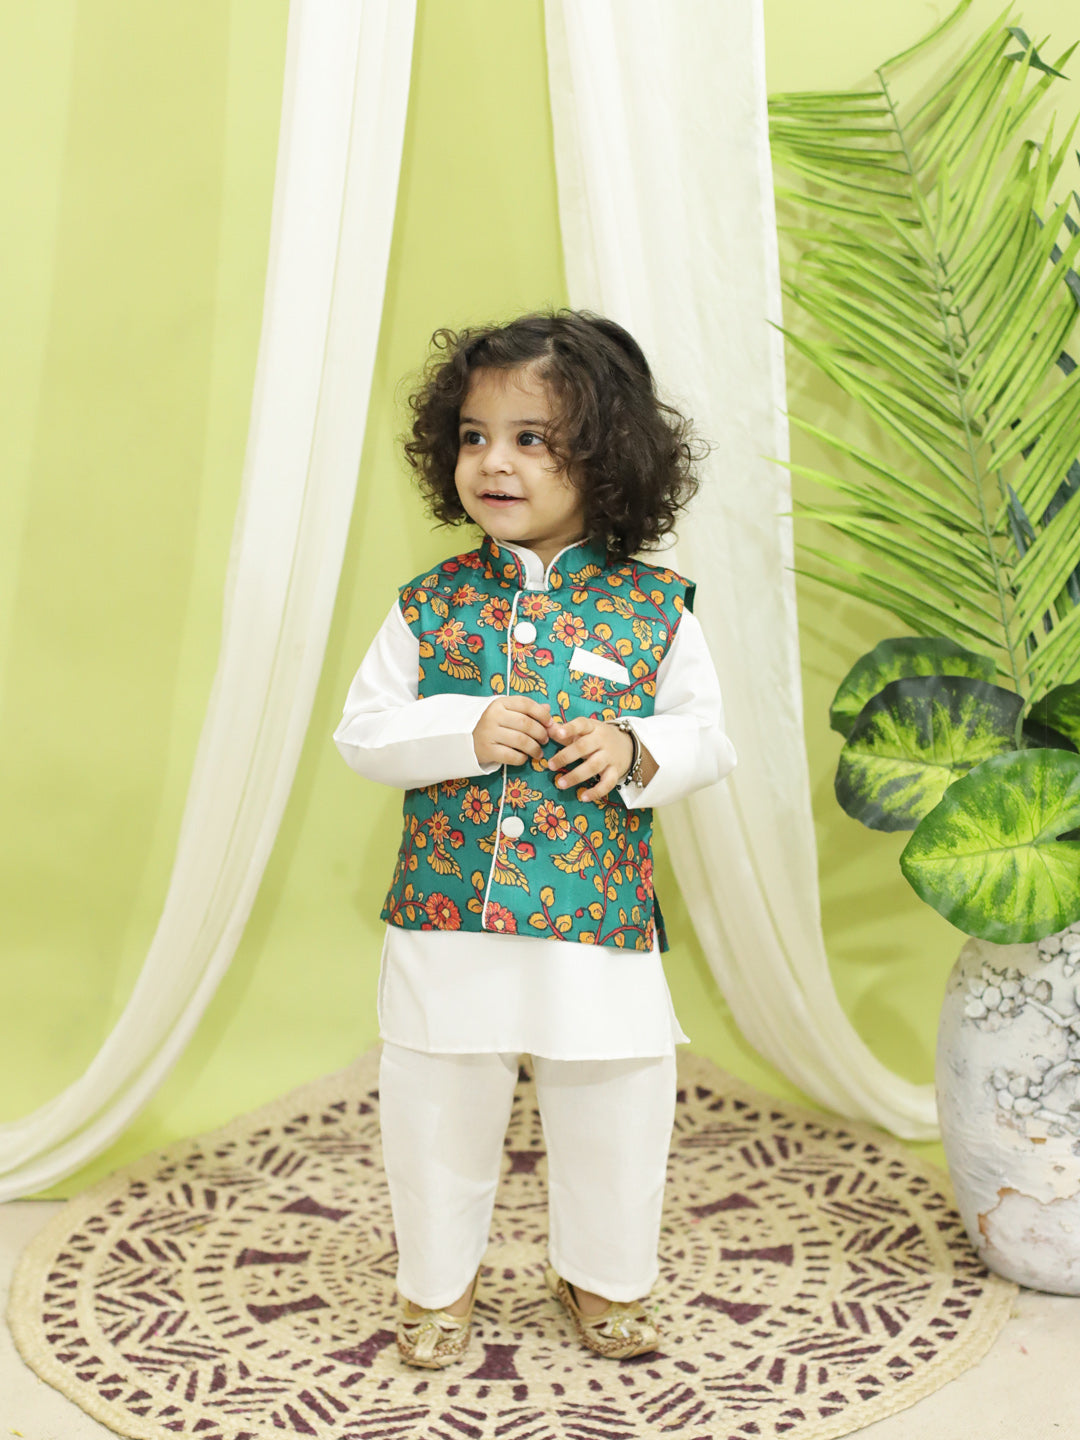 BownBee Kalamkari Print Jacket with Kurta Pajama for Boys- Green